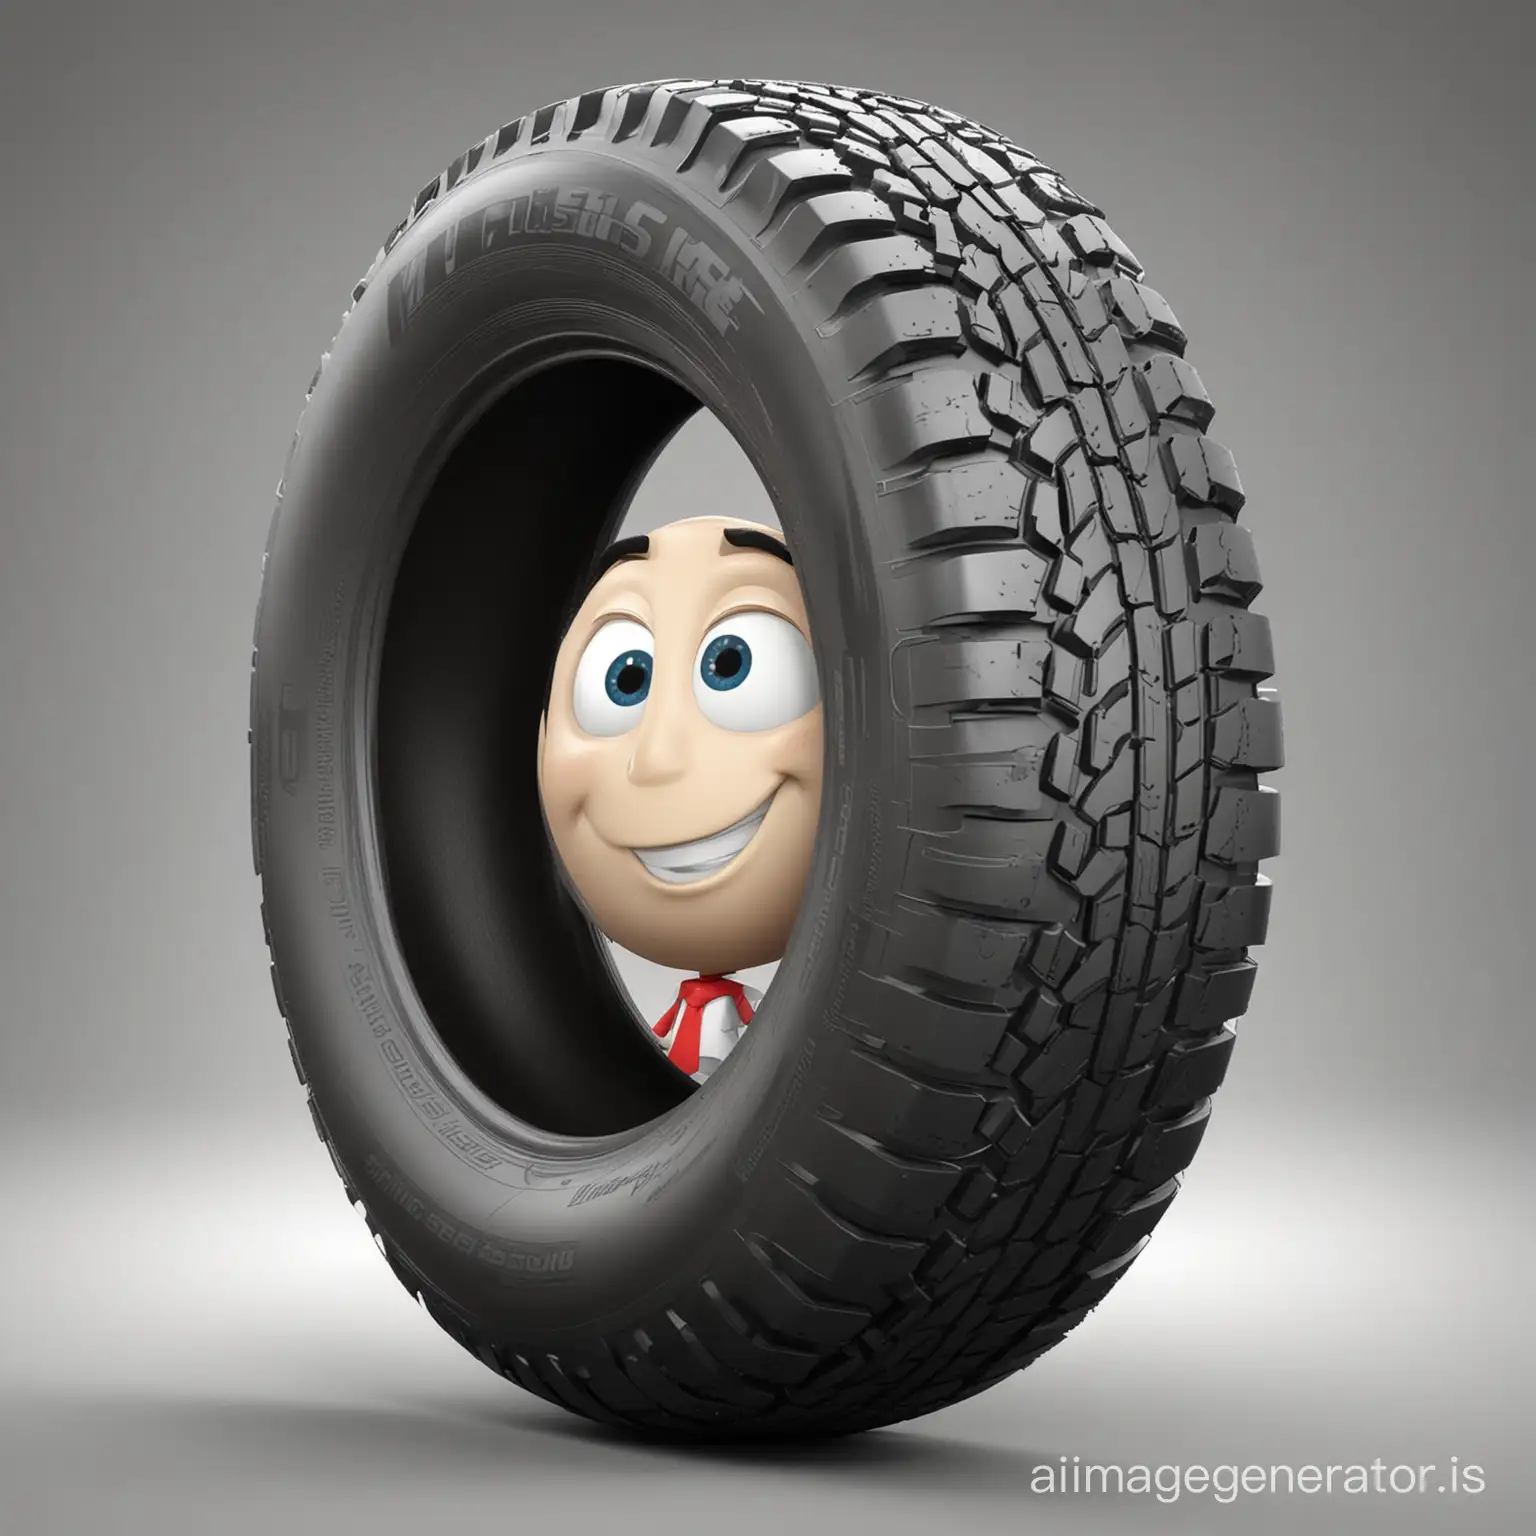 Bridgestone-Tire-Cartoon-Character-Playful-Mascot-Rolling-Into-Adventure